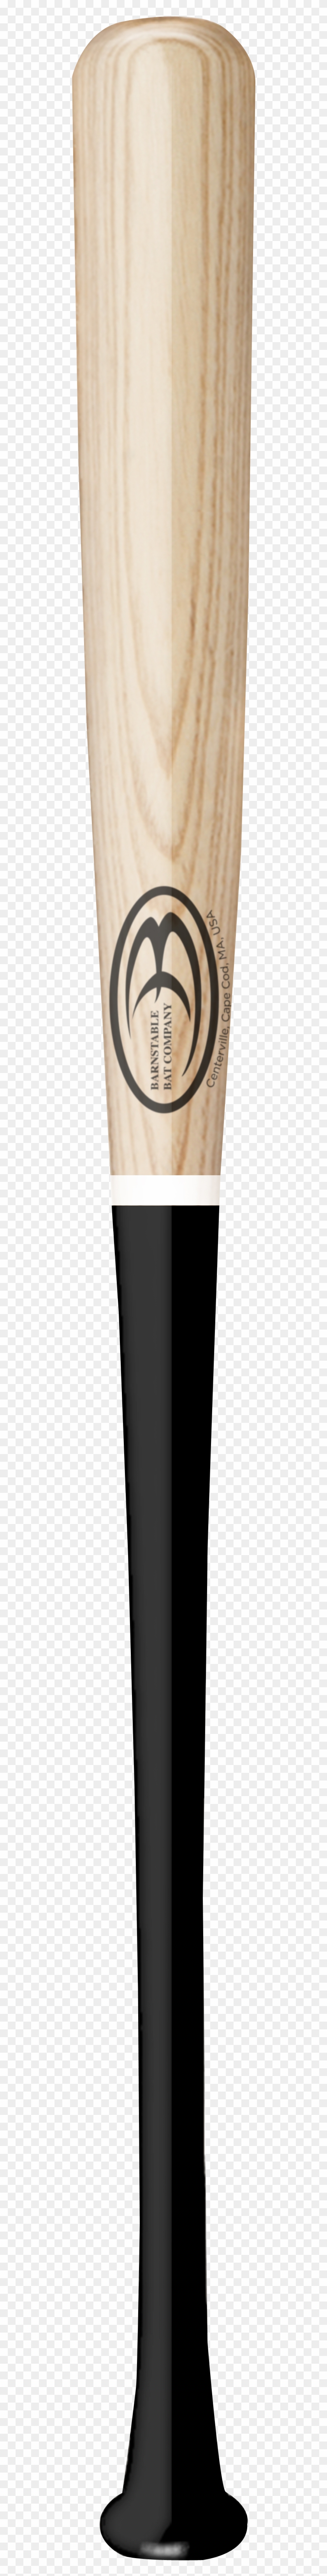 Clipart Baseball Bat Collection Png Image - Makeup Brushes #832994